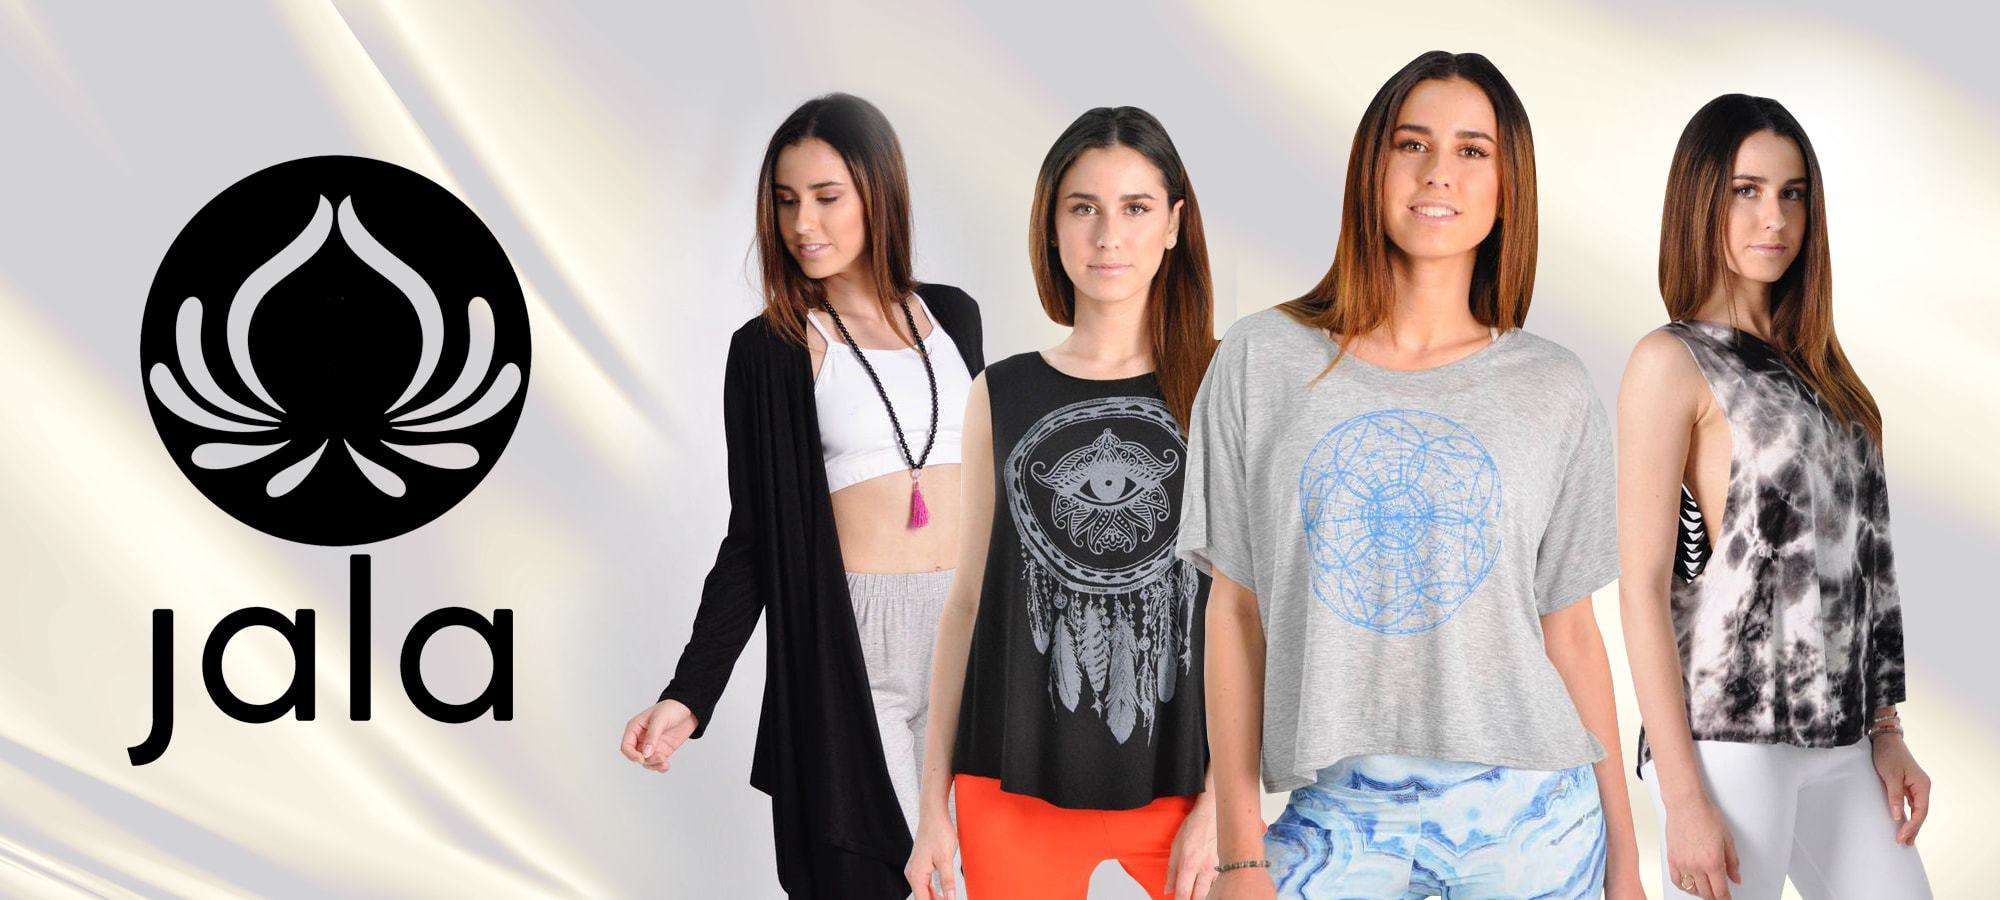 Jala Clothing - Yoga Inspired Apparel Brand